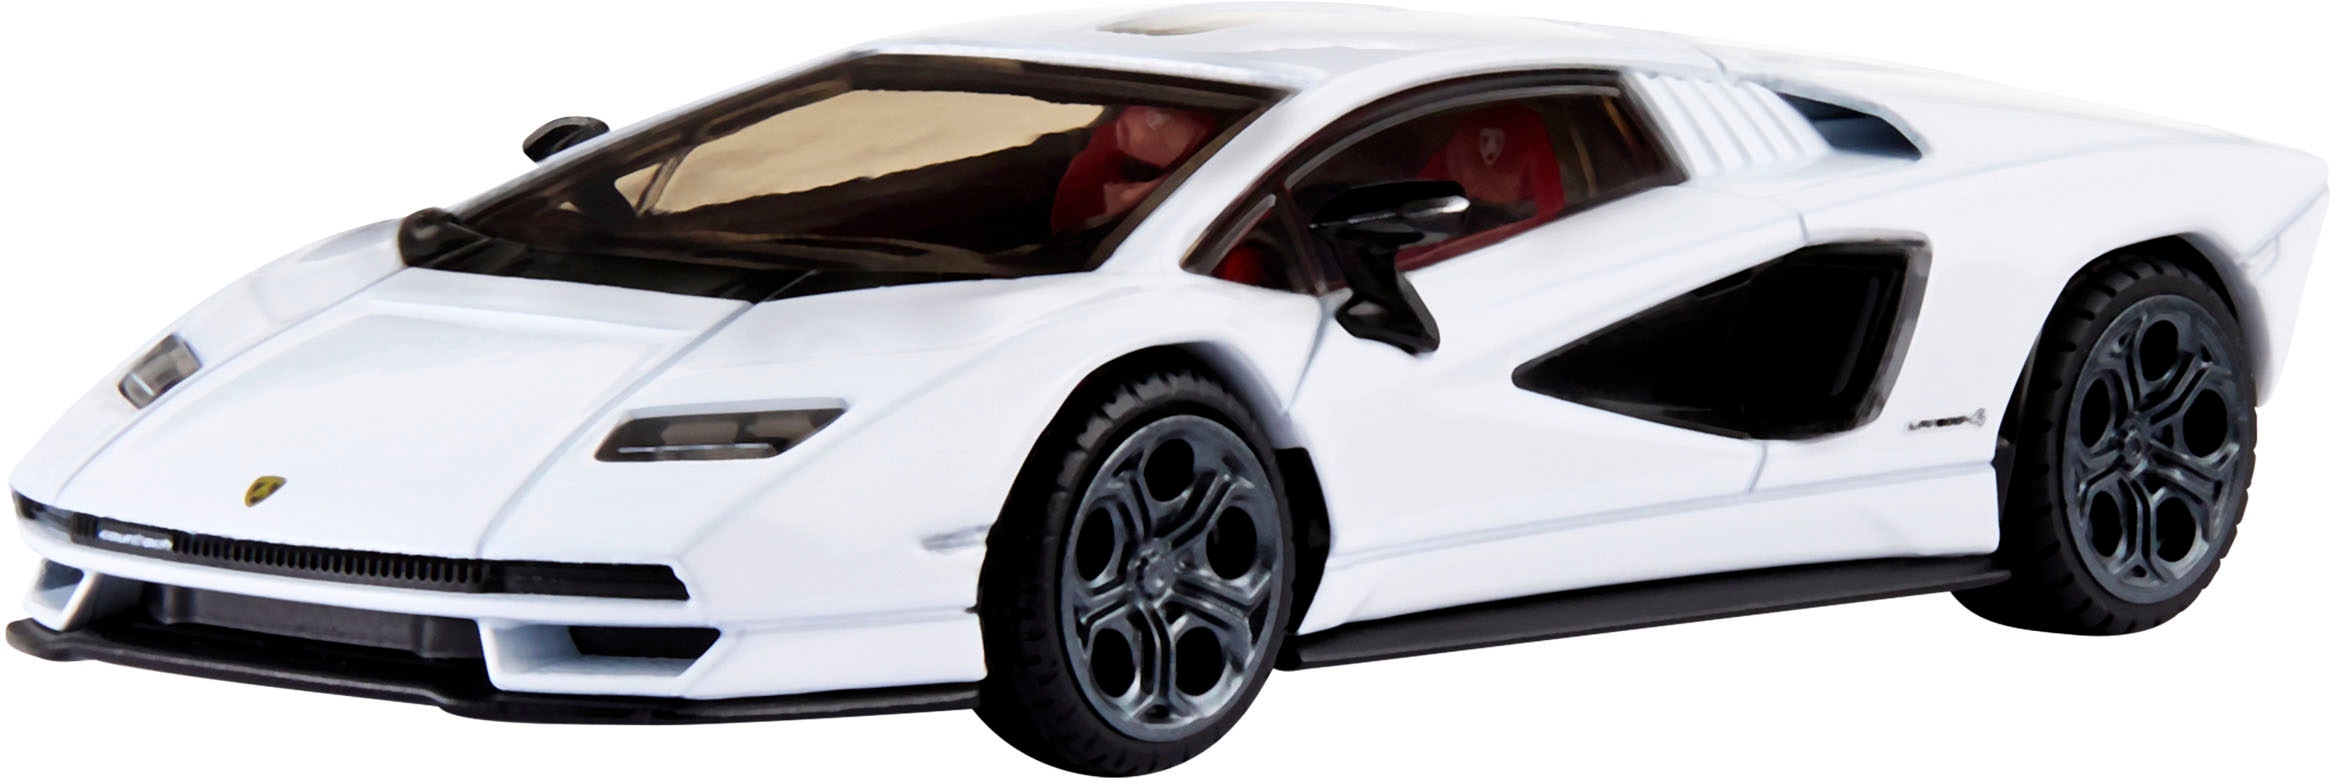 Hot Wheels Spielzeug-Auto »Premium bei 1:43« Lamborghini